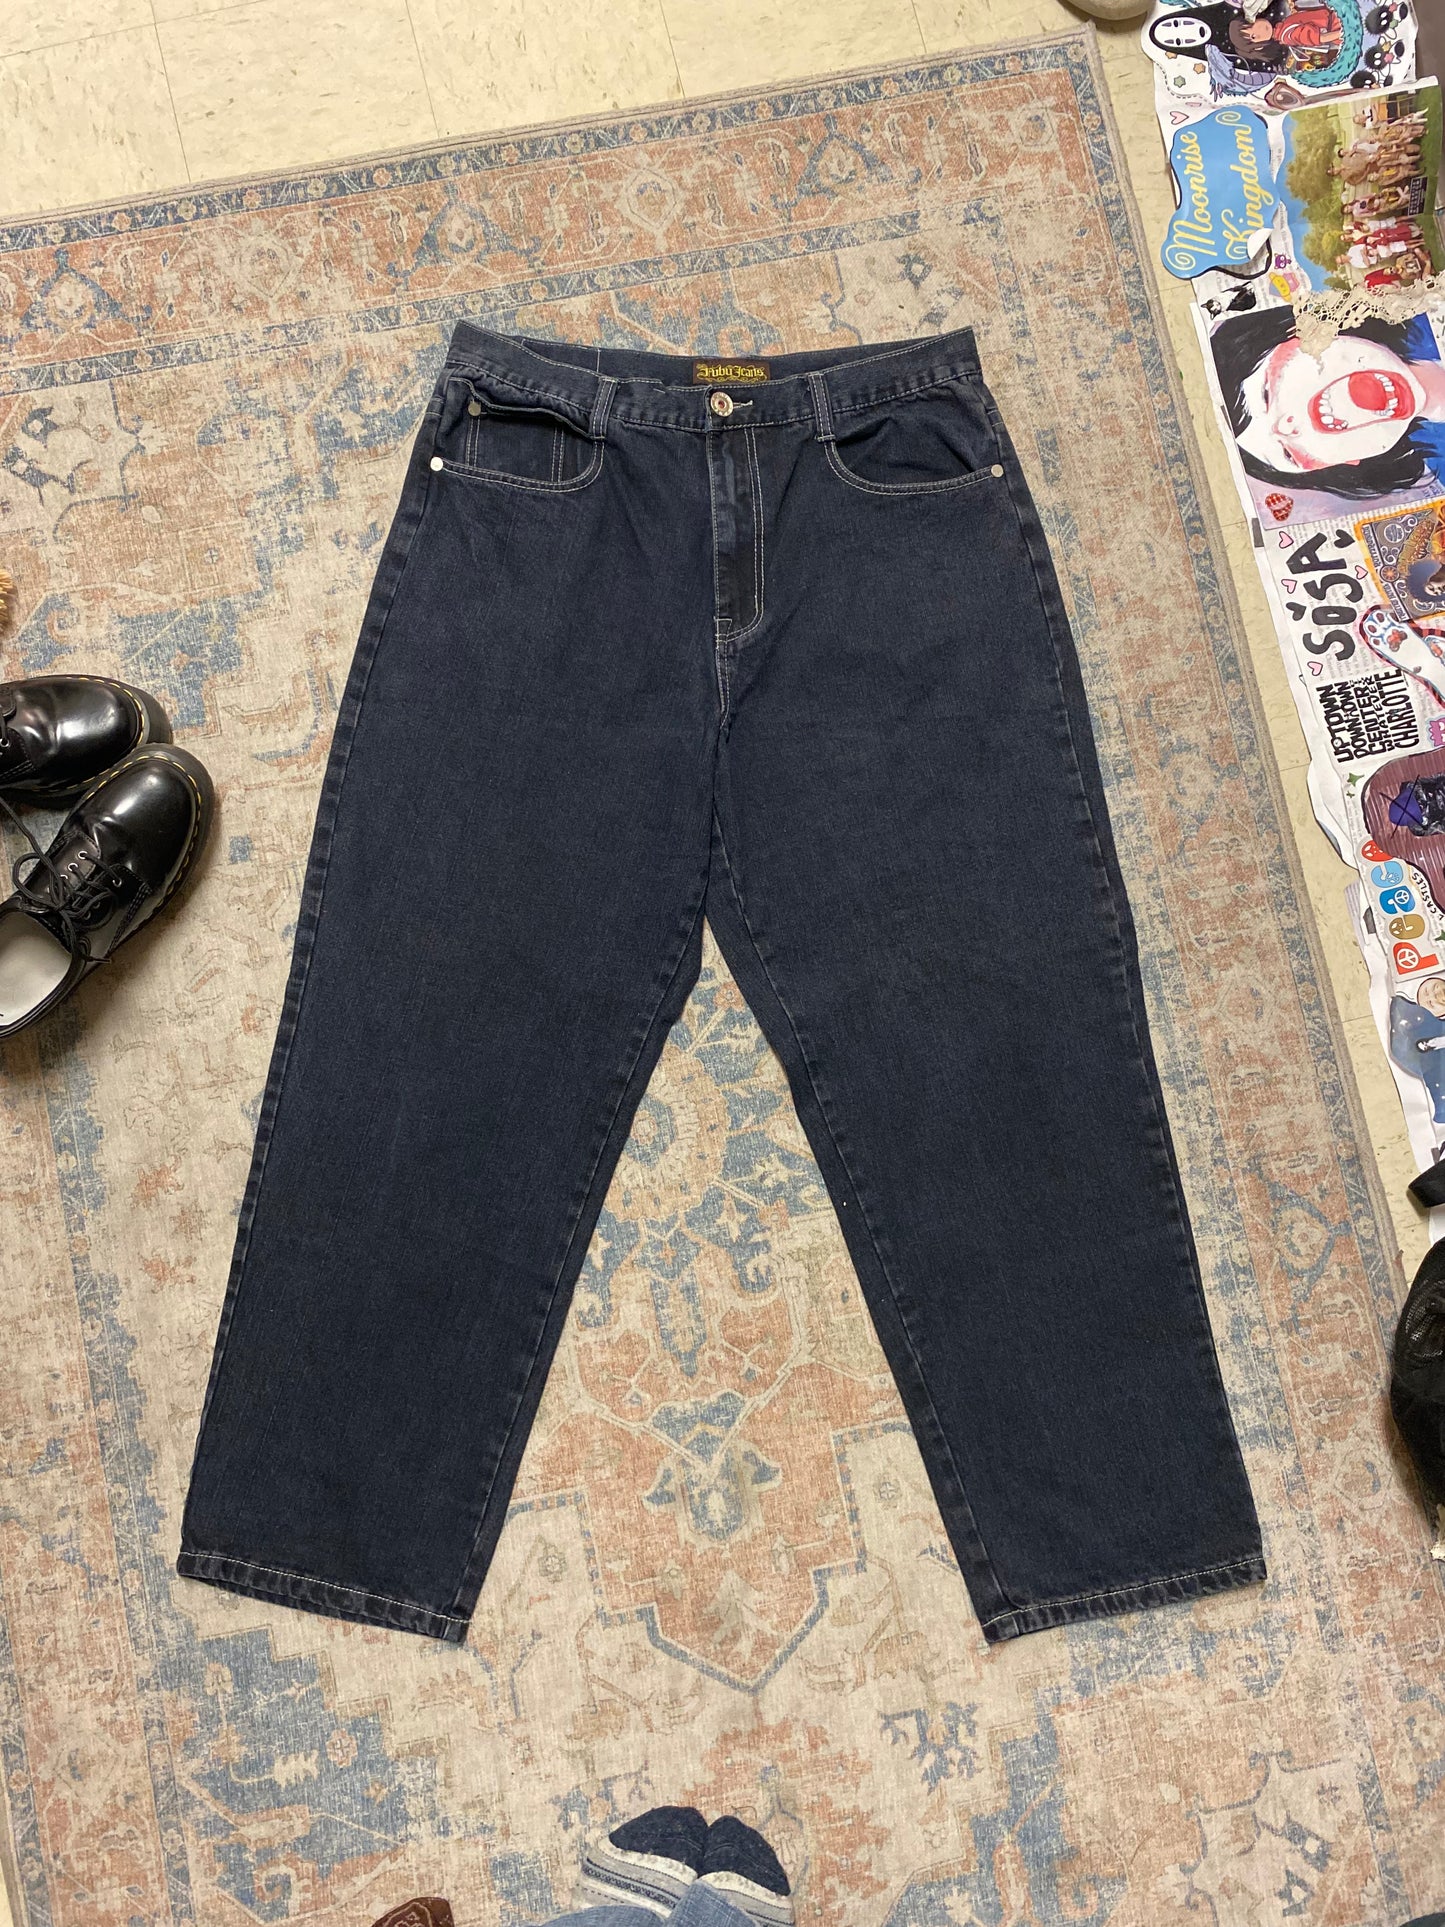 FUBU jeans (mens)